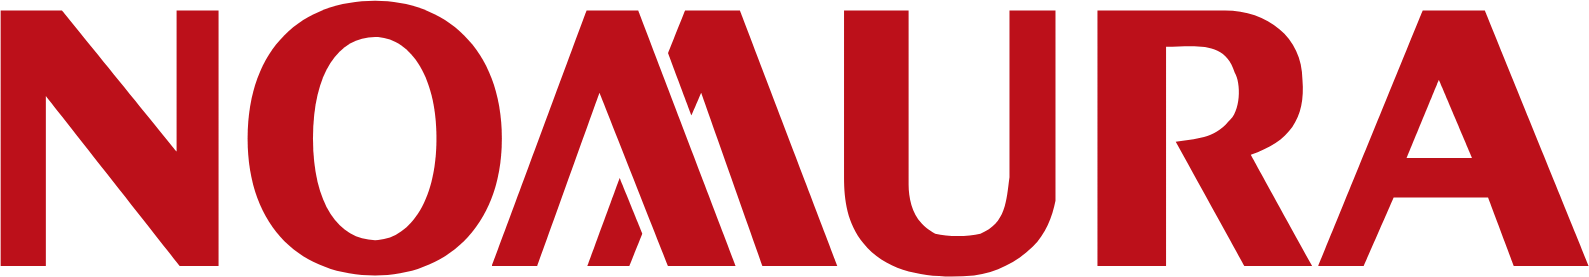 Nomura Holdings logo large (transparent PNG)